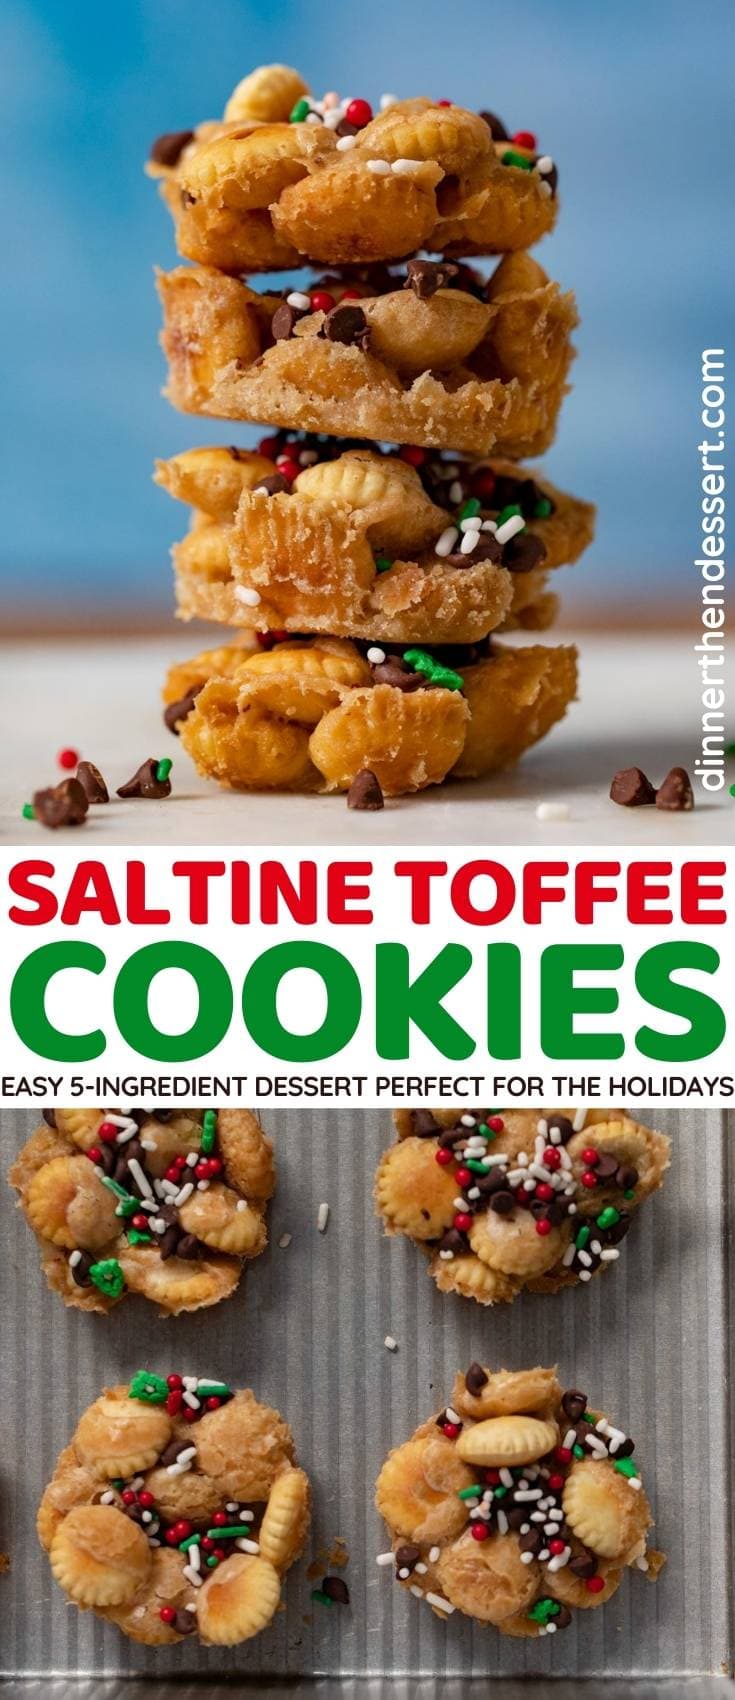 Saltine Toffee Cookies collage